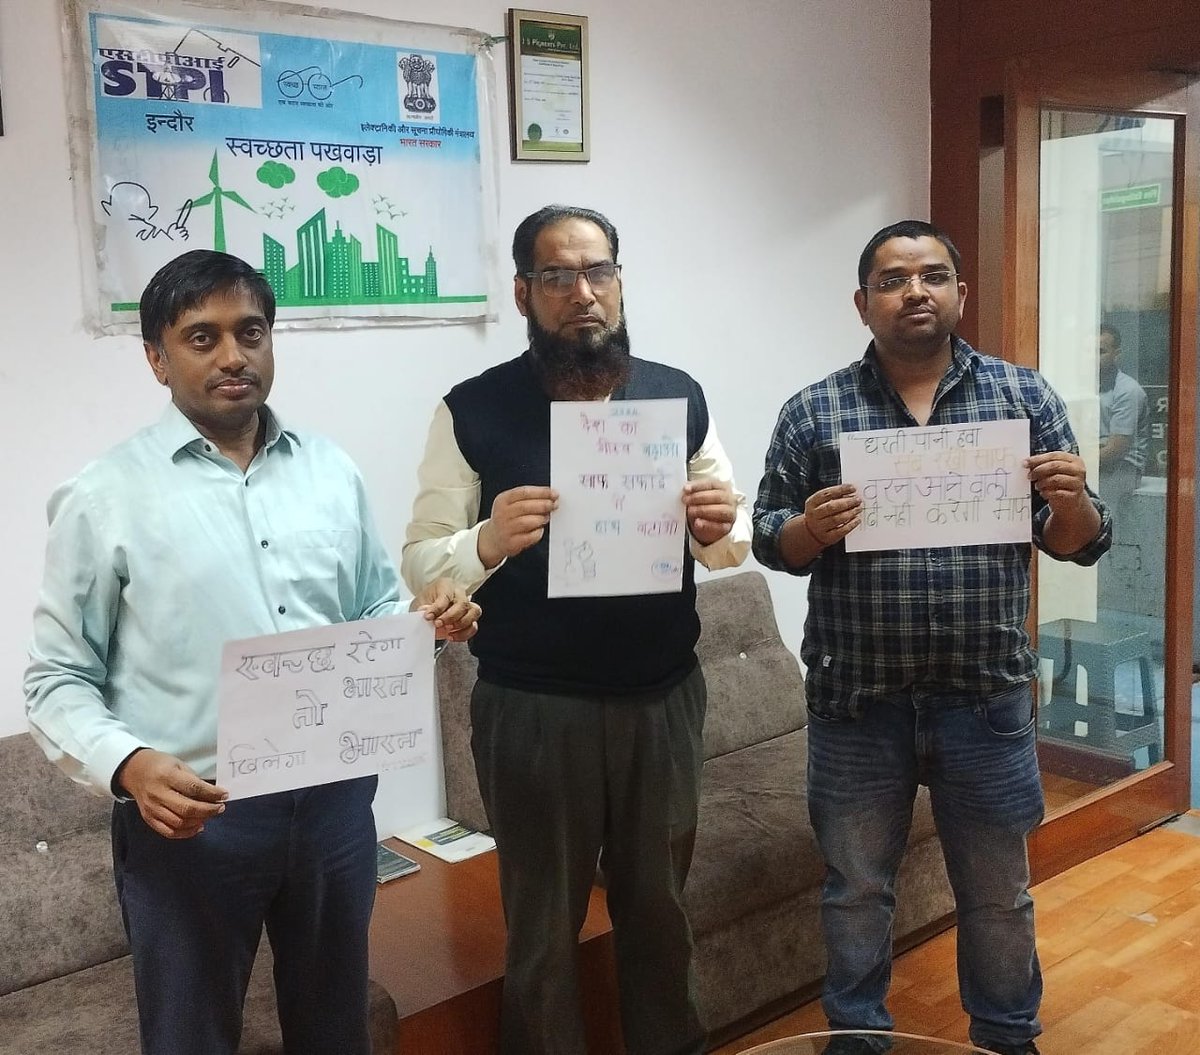 As part of #SwachhtaPakhwada 2024 #STPI #Indore officials participated in slogan writing competition. #SwachhBharatMission #SwachhBharat #SwachhataHiSeva @STPIINDIA @STPINoida @purnmoon @DeveshTyagi @arvindtw @varma_ravii